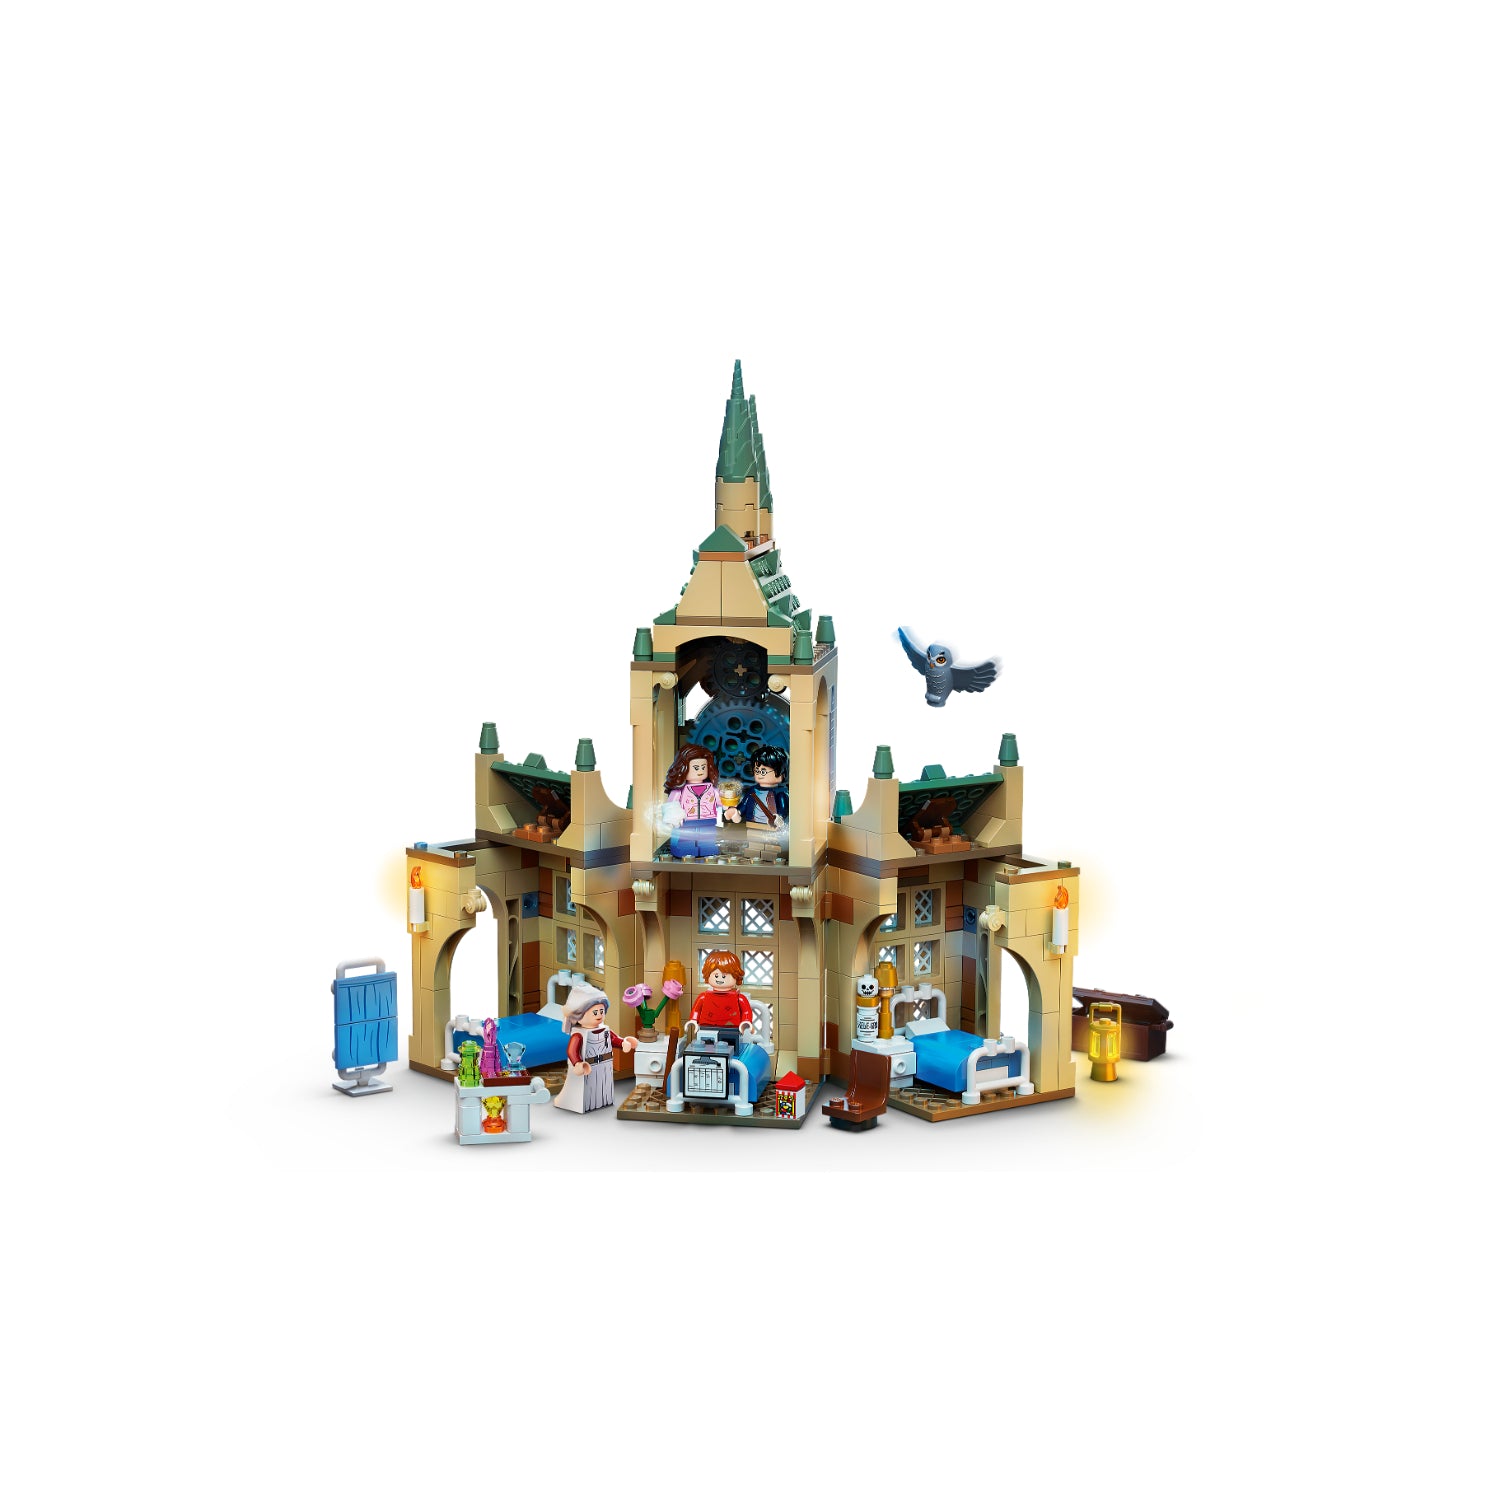 LEGO® Harry Potter™: Ala de Enfermería de Hogwarts™ (76398)